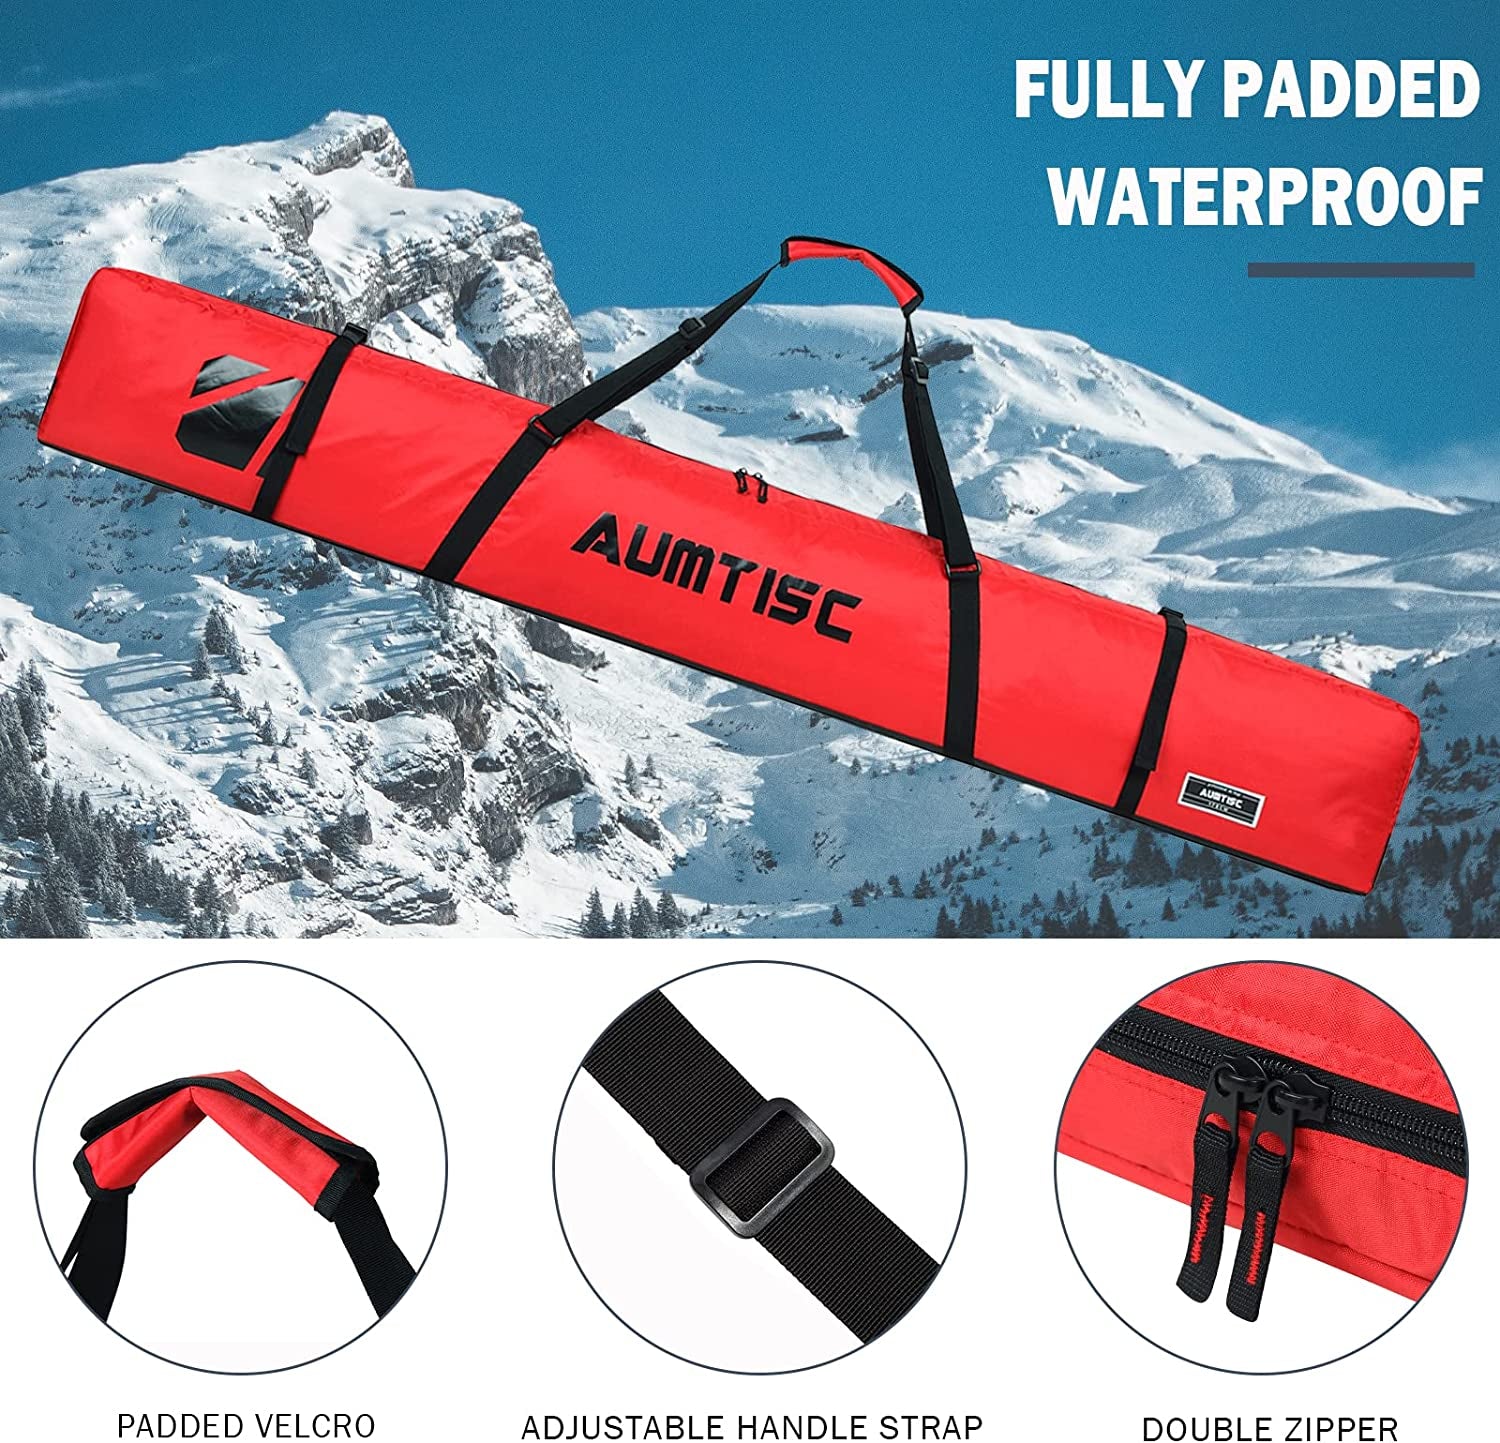 AUMTISC Single Ski Bag Travel Padded to Transport Skis Gear Pocket with Adjustable Handle 170 185 Cm (2352)